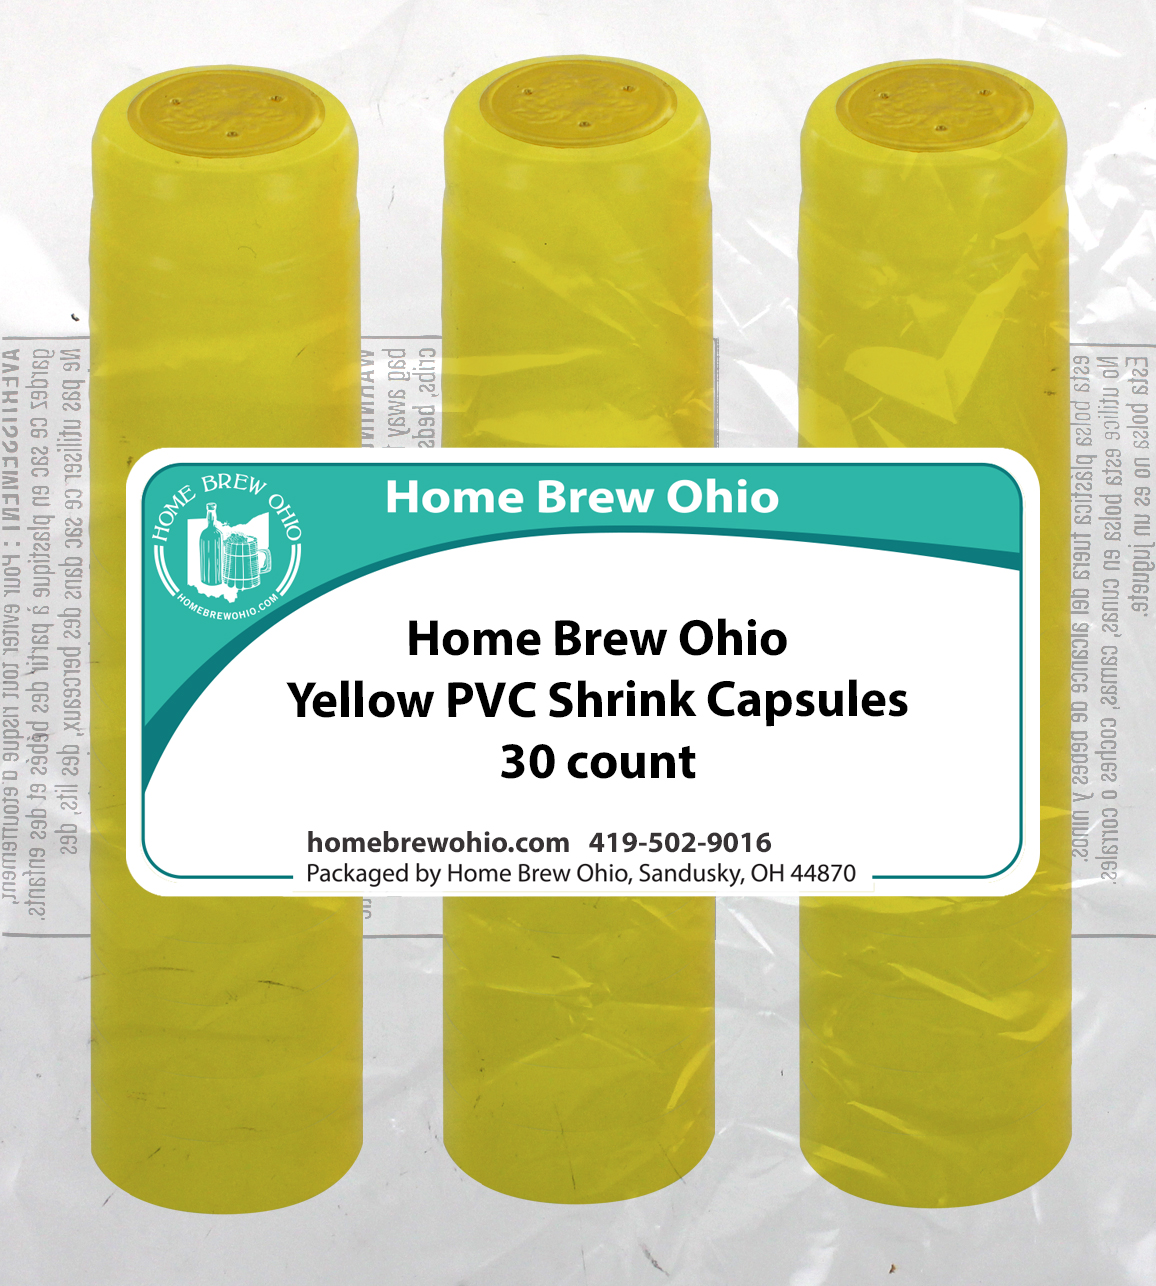 HOME BREW OHIO HOMEBREWOHIO.COM Home Brew Ohio Yellow PVC Shrink Capsules 30 count